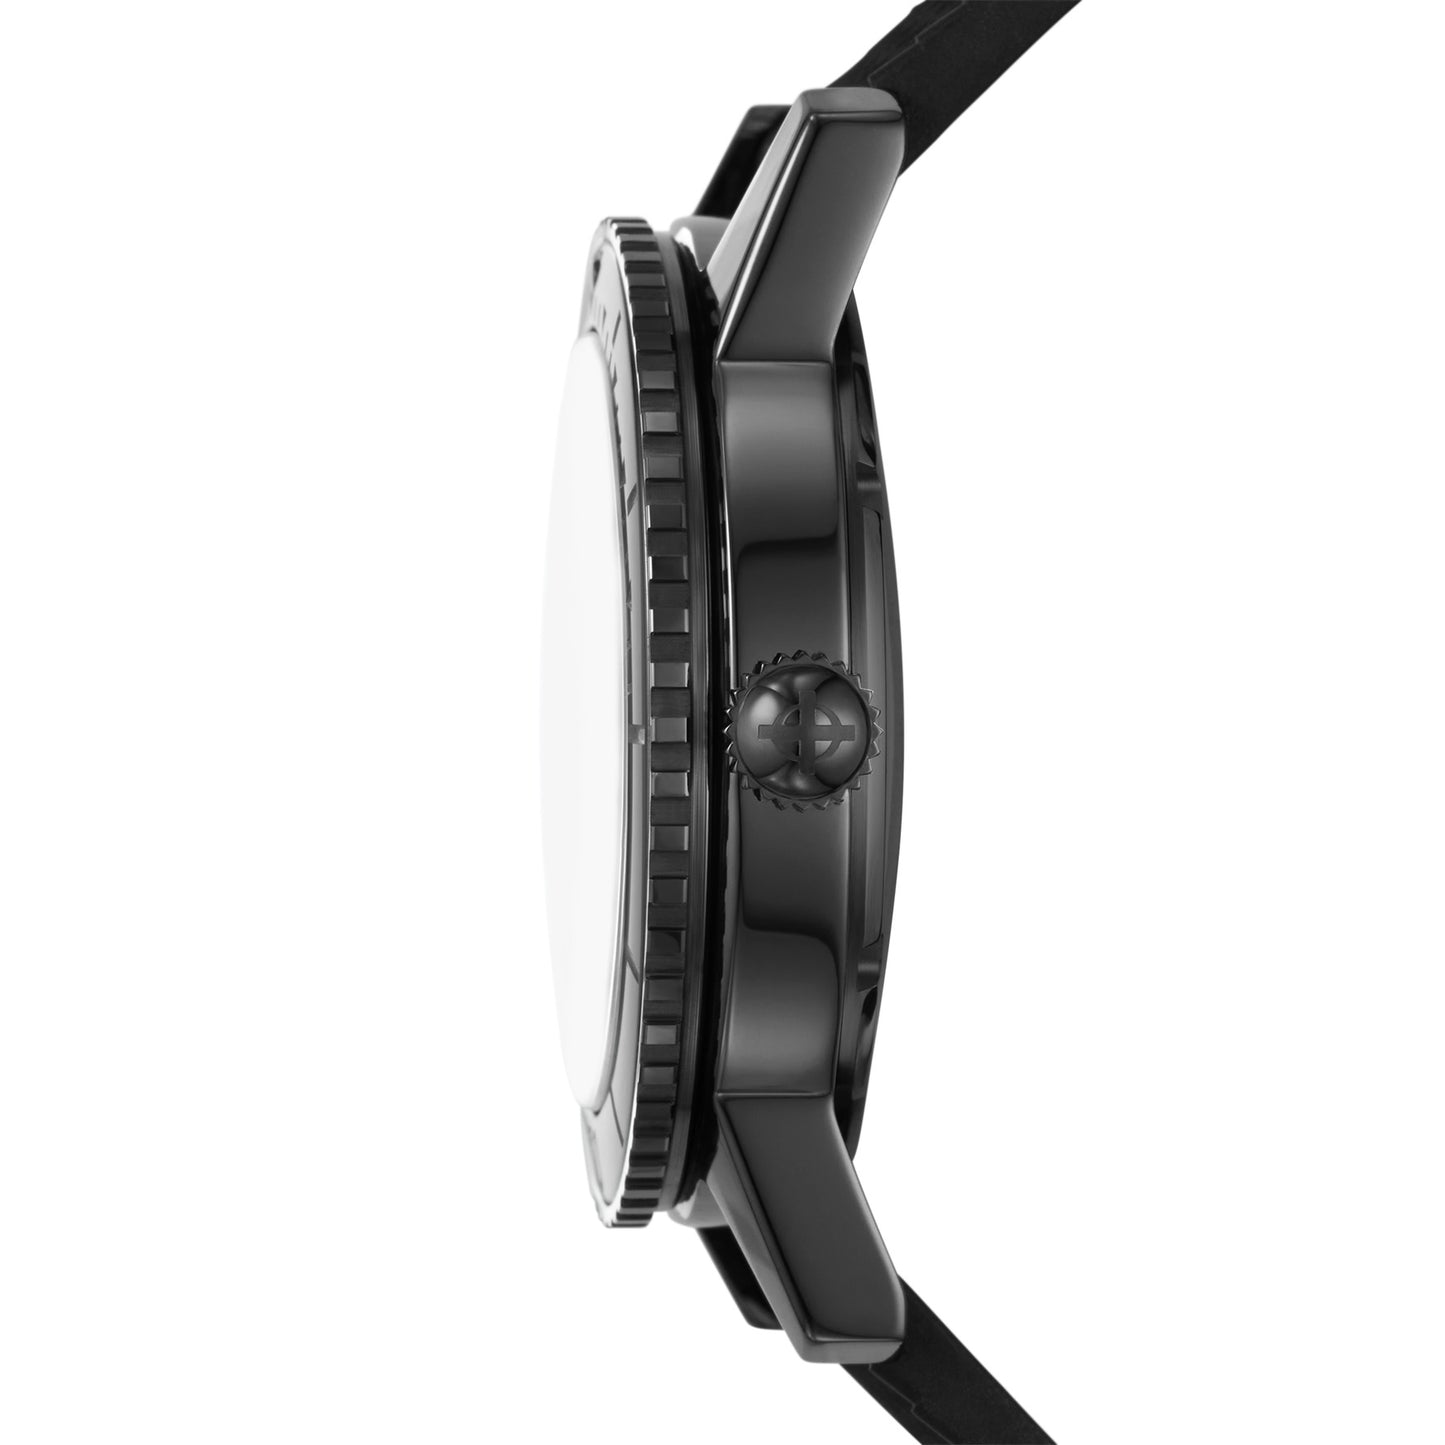 Zodiac - Z09595 - Super Sea Wolf STP 1-11 Swiss Automatic Three-Hand Date Black Rubber Watch